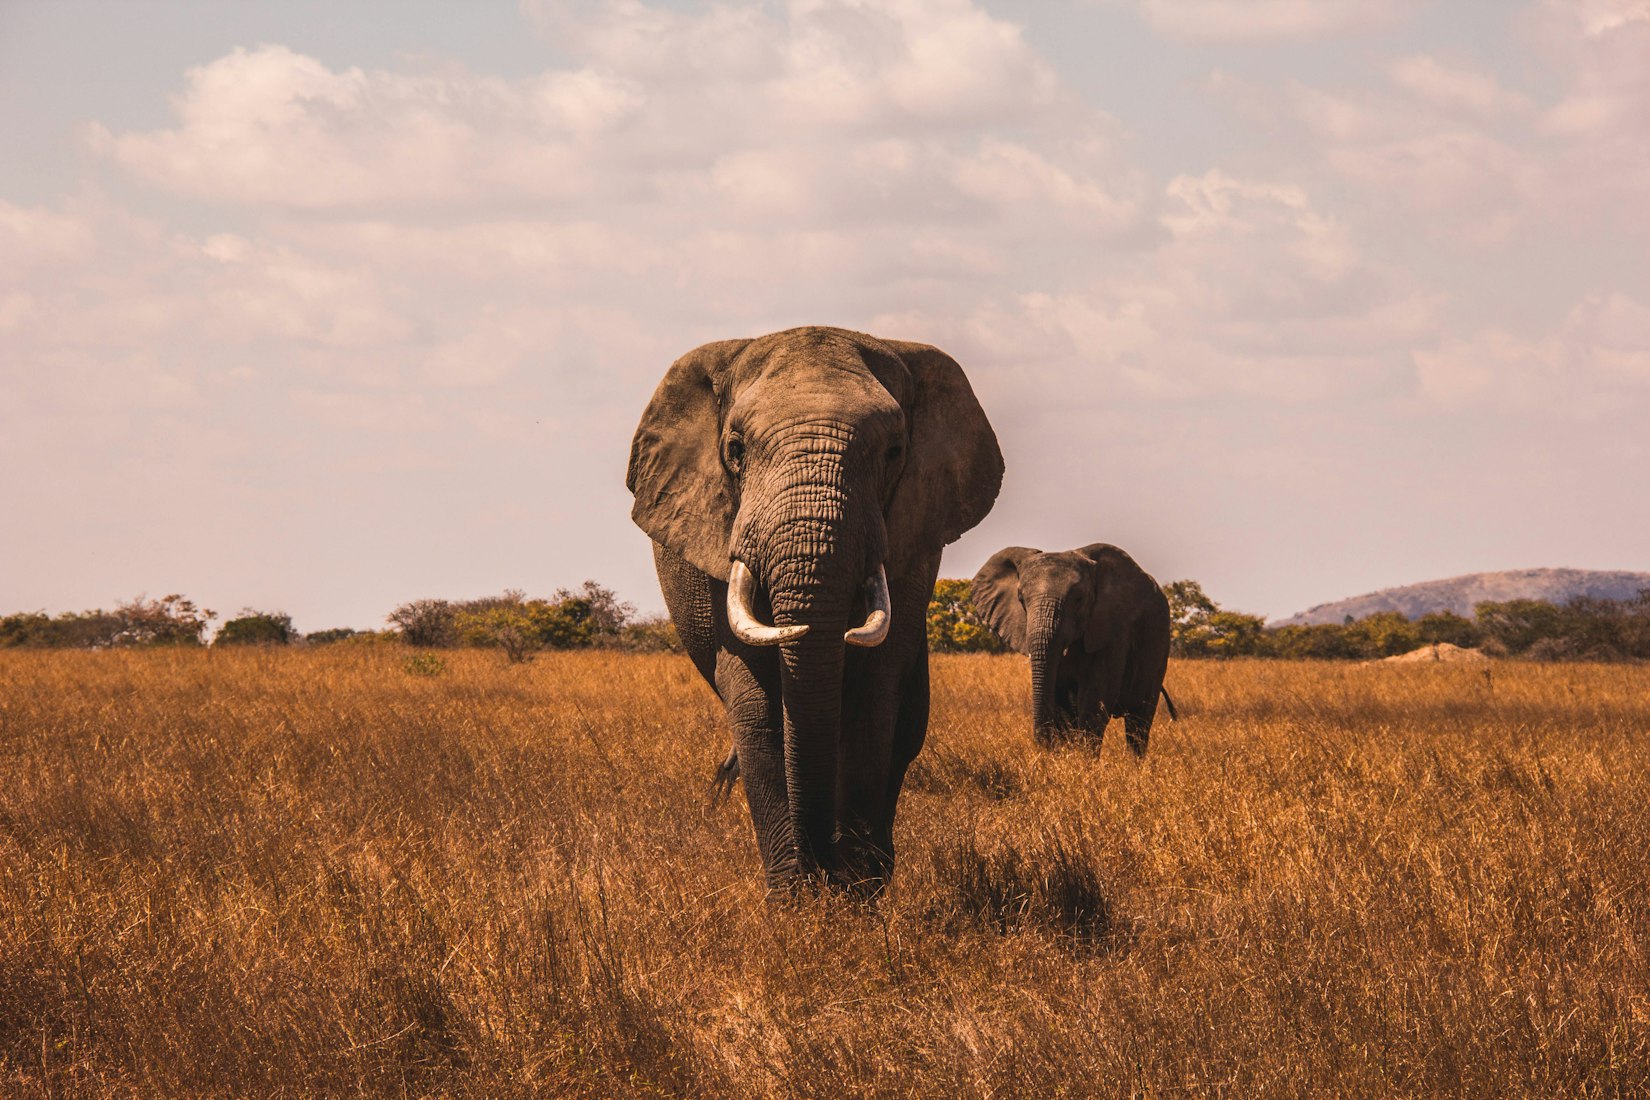 Elephants in Ethiopia